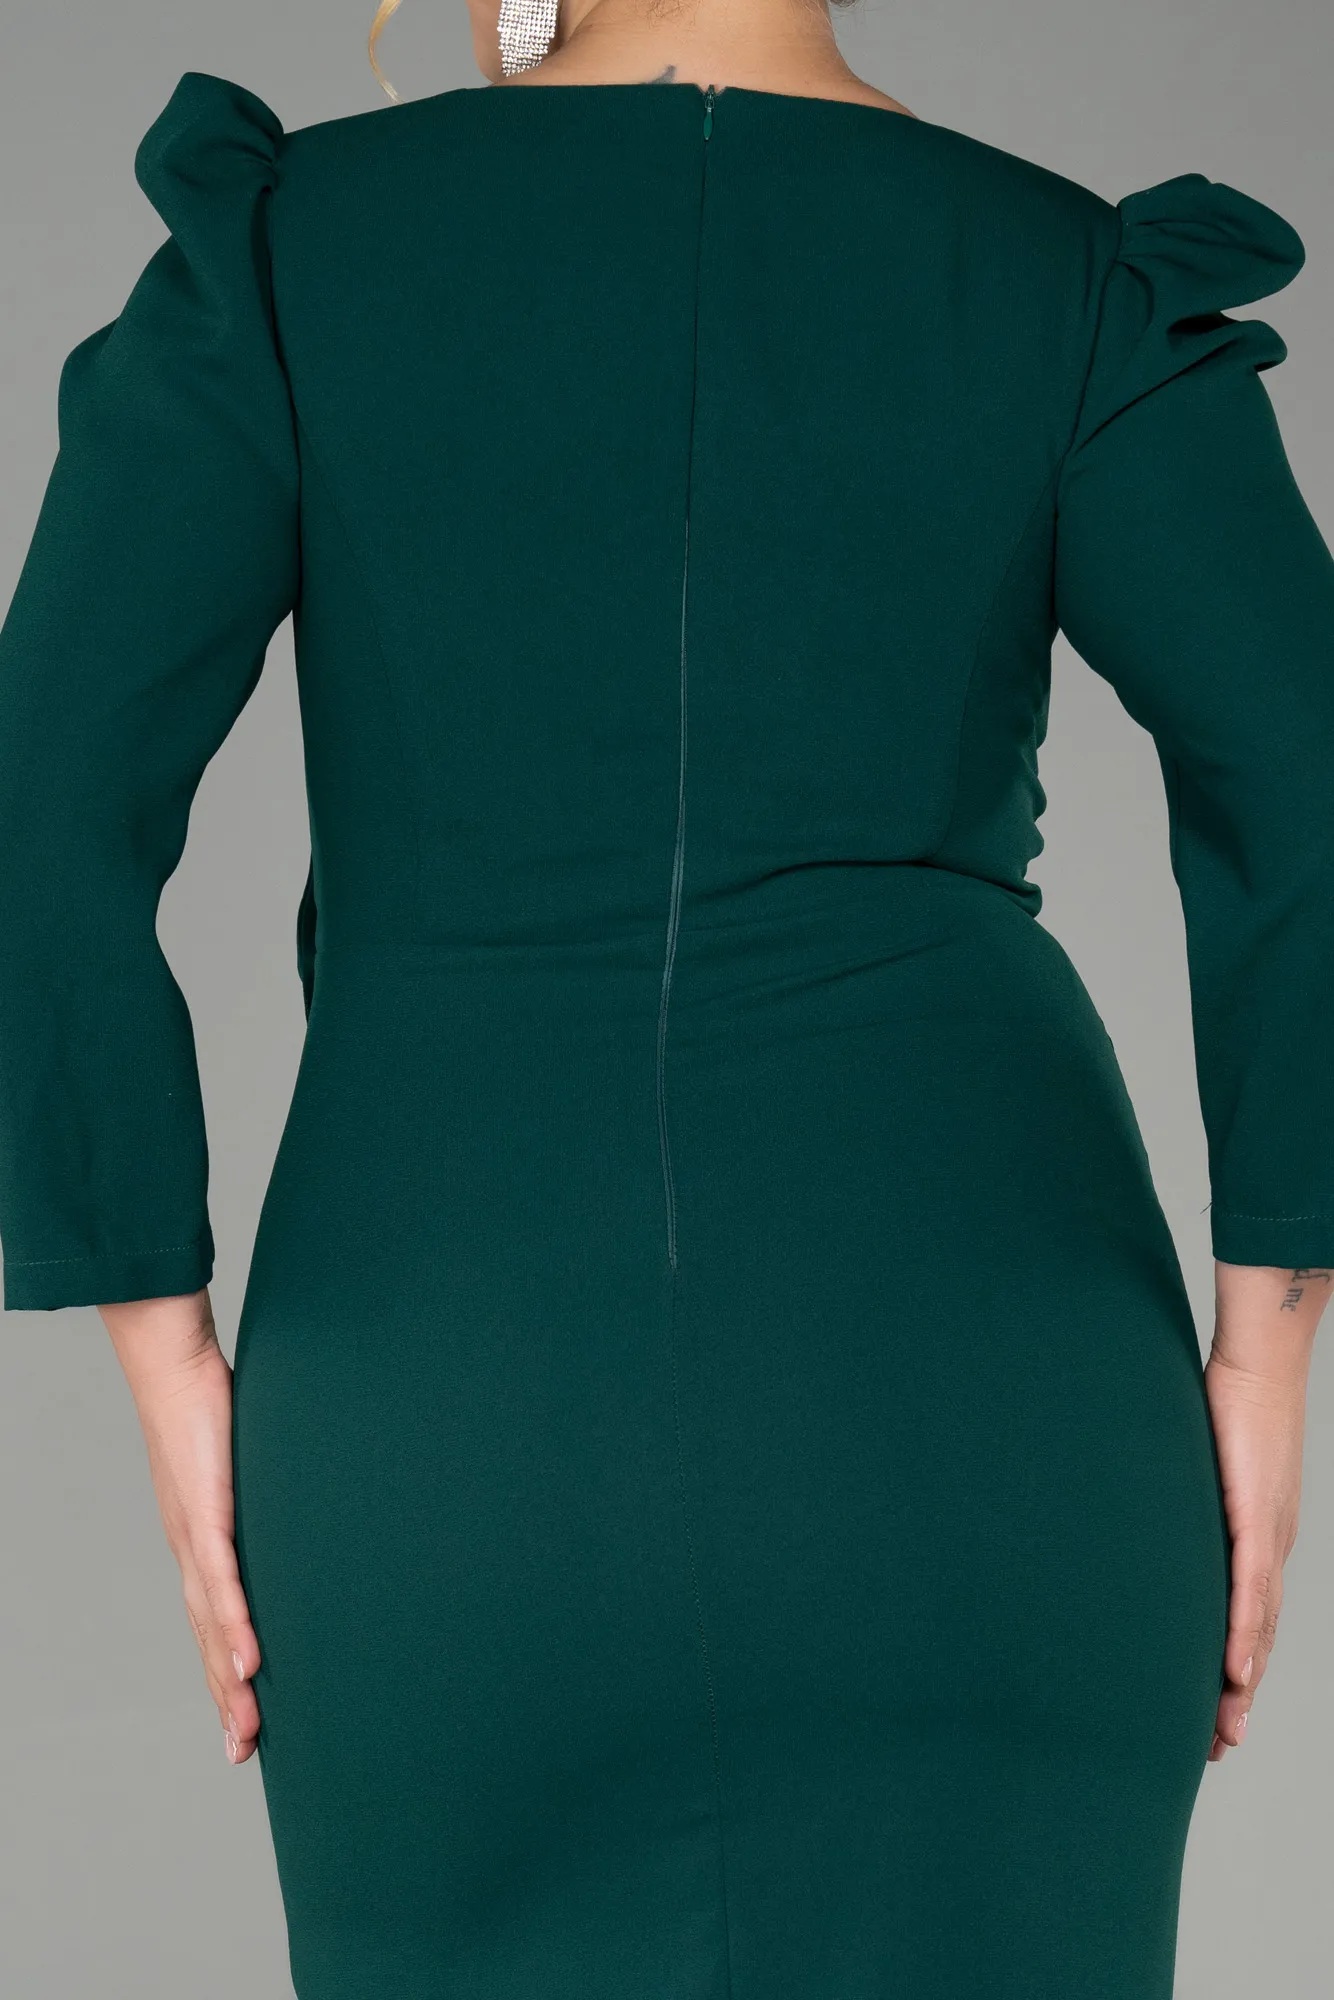 Emerald Green-Midi Plus Size Evening Dress ABK1822